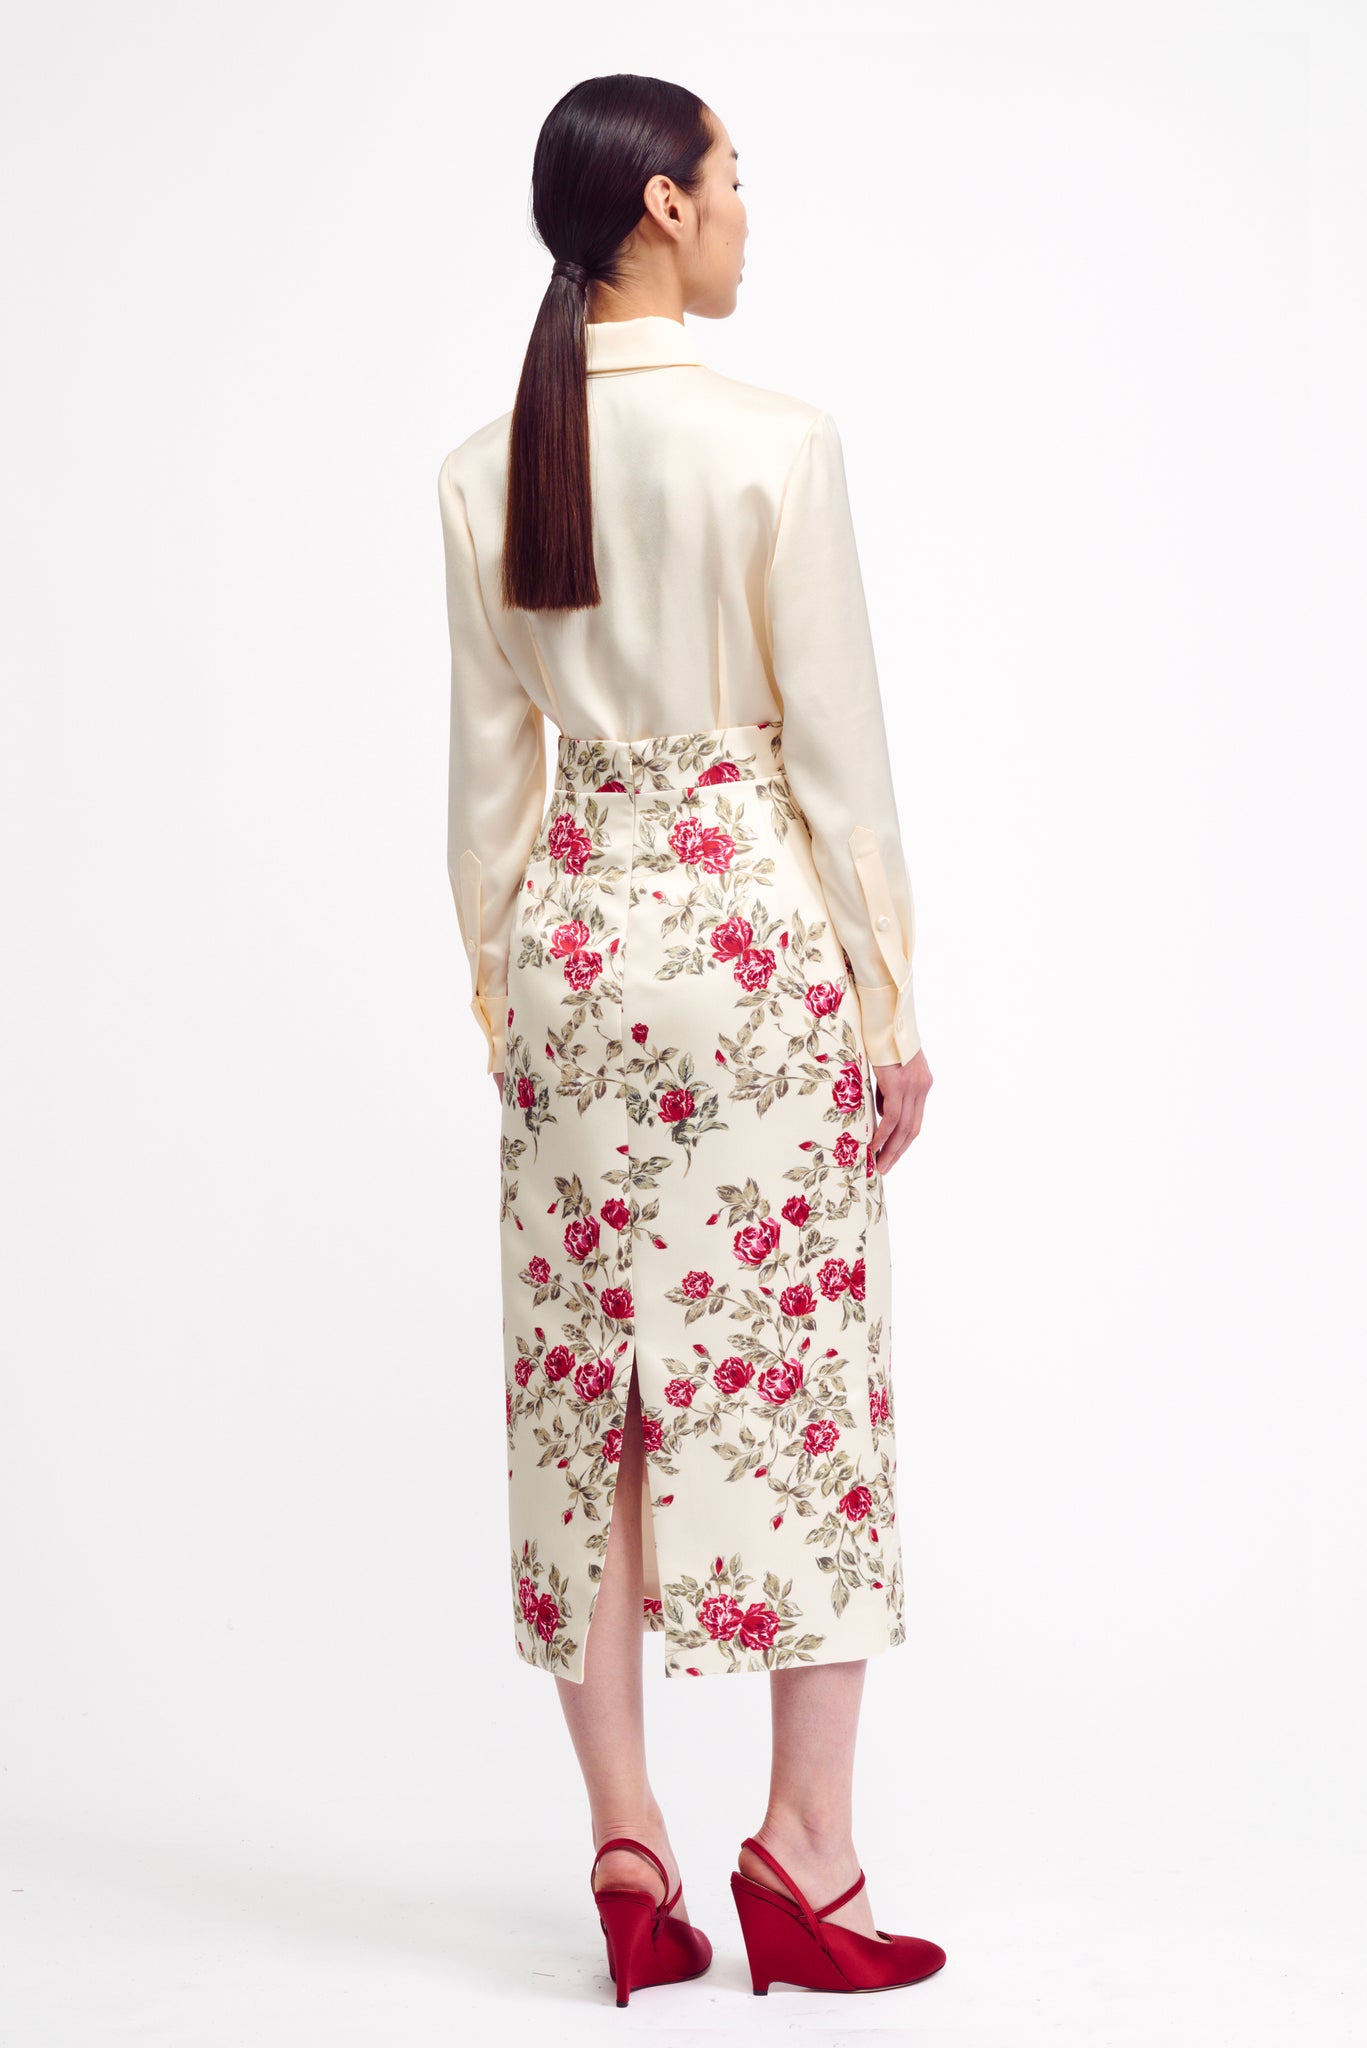 Lorinda Skirt in Red Rose Floral Printed Italian Duchess Satin | Emilia Wickstead